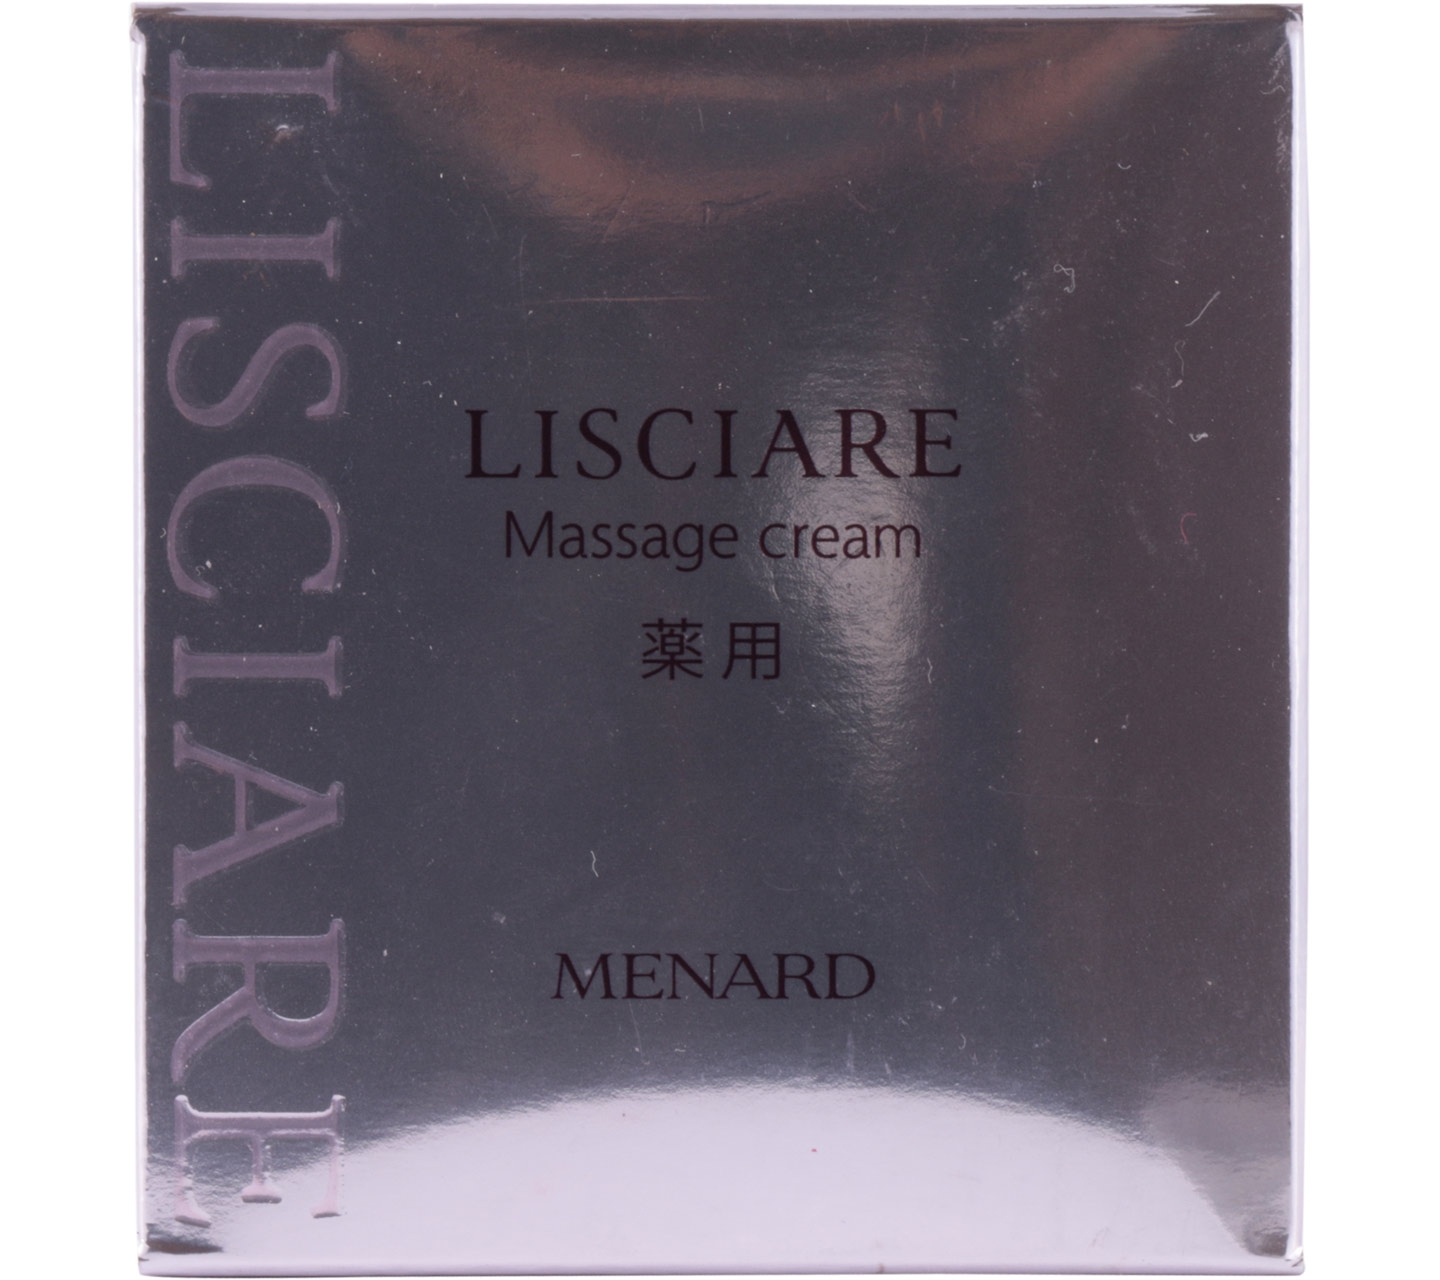 Menard Lisciare Massage Cream Skin Care